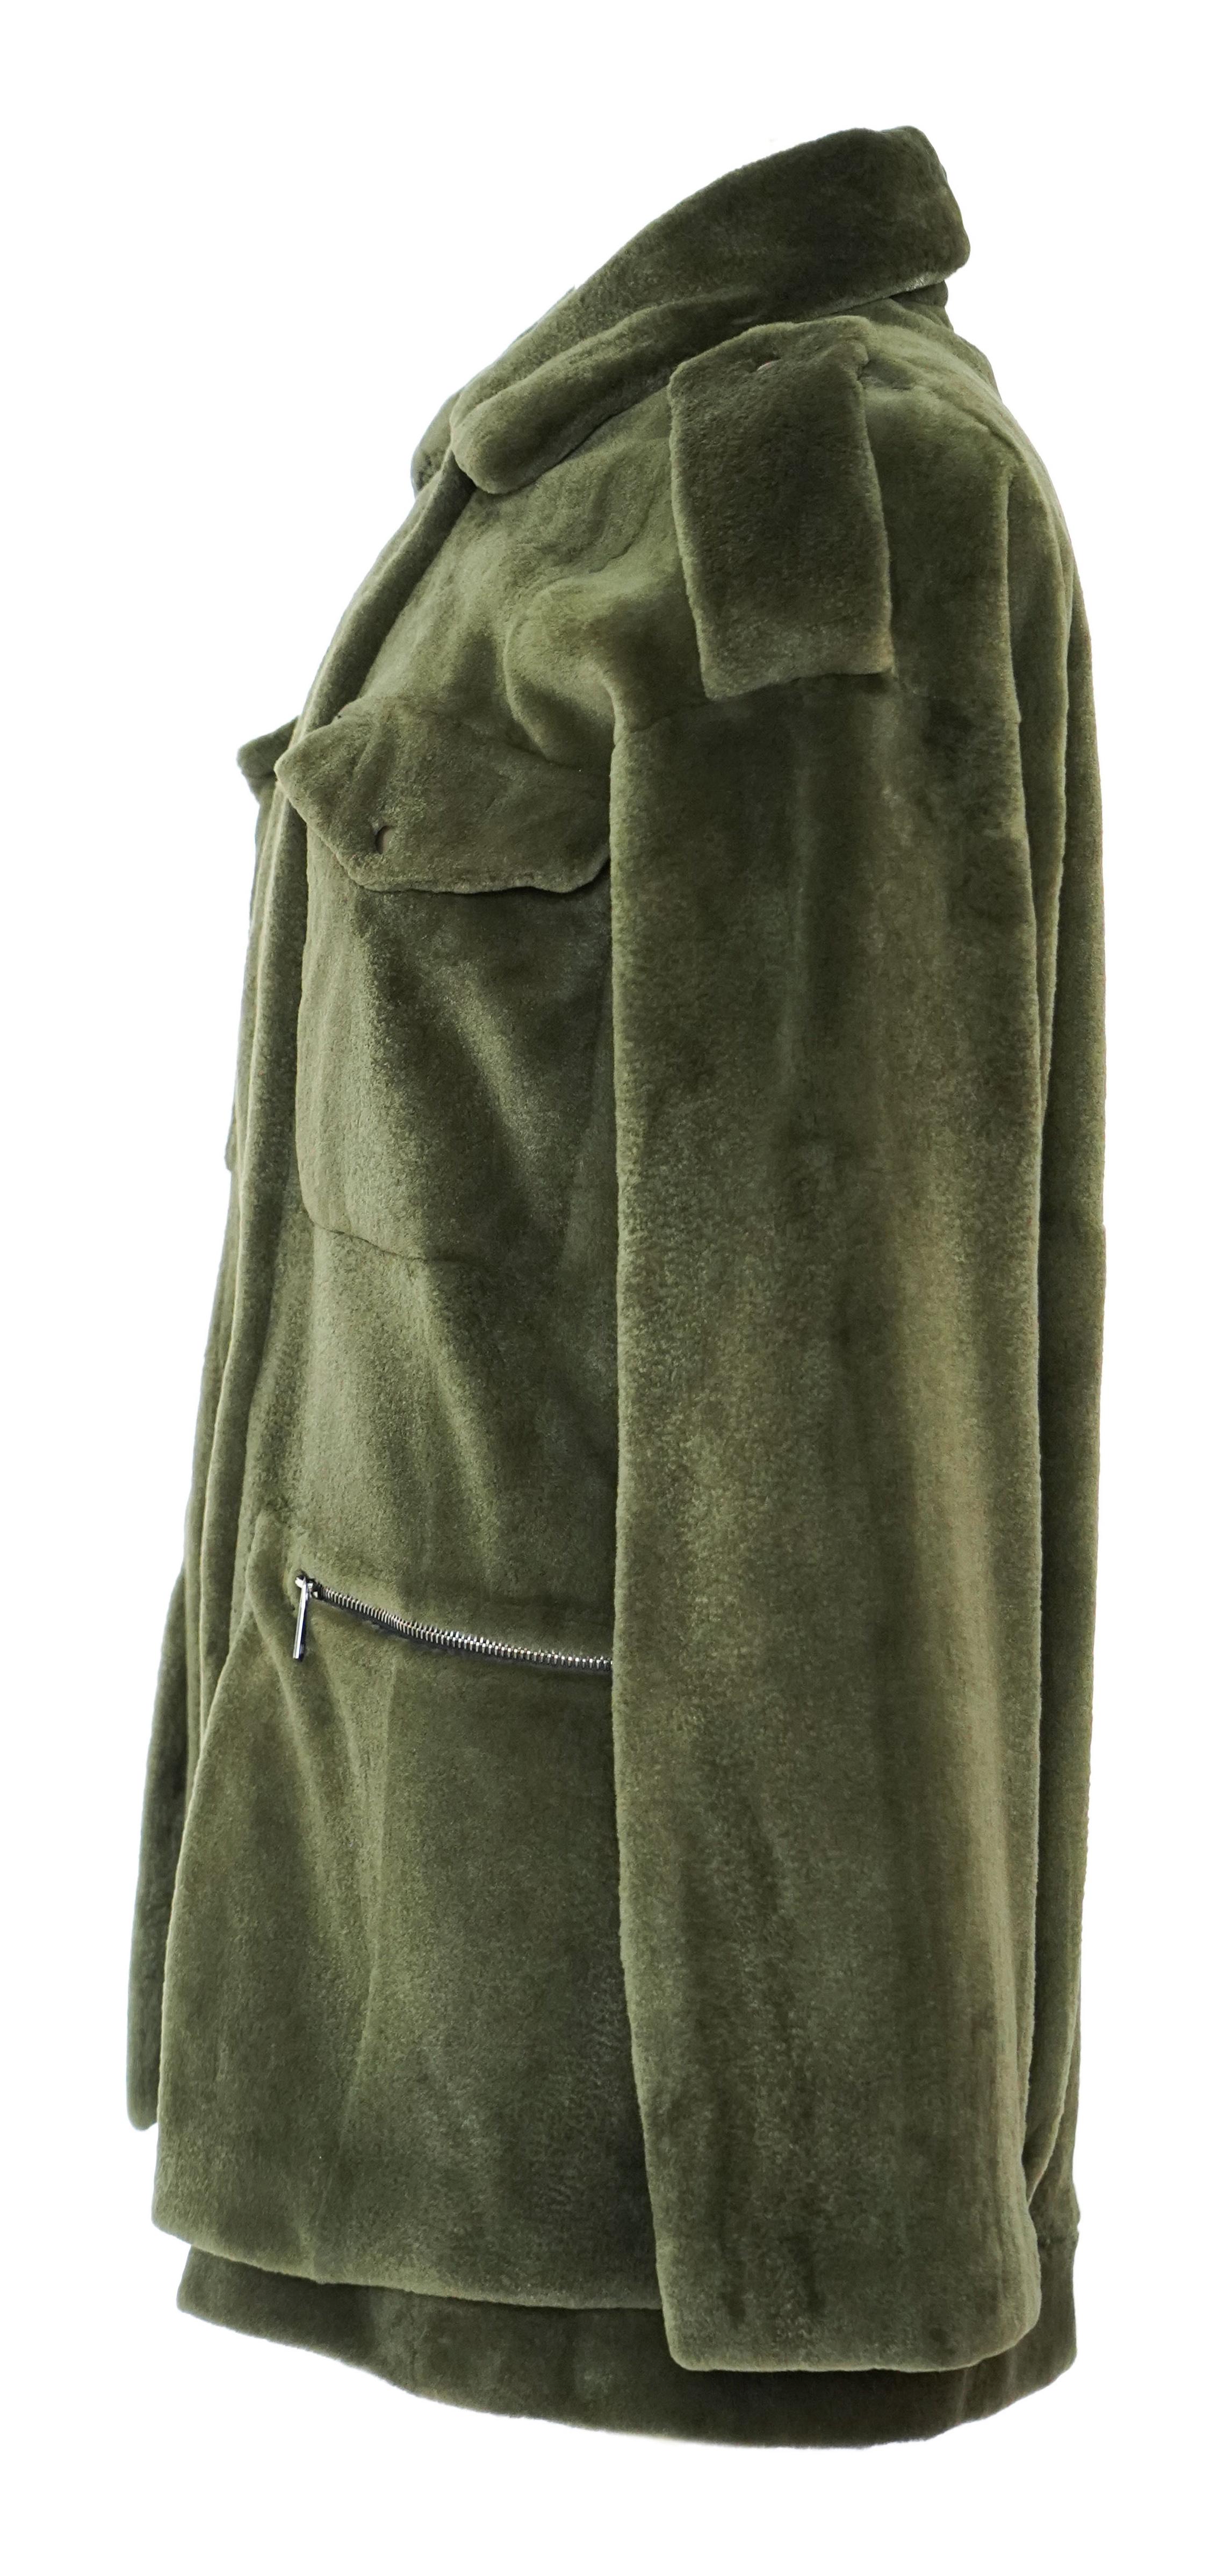 Shaved mink jacket. 100% silk detachable lining.